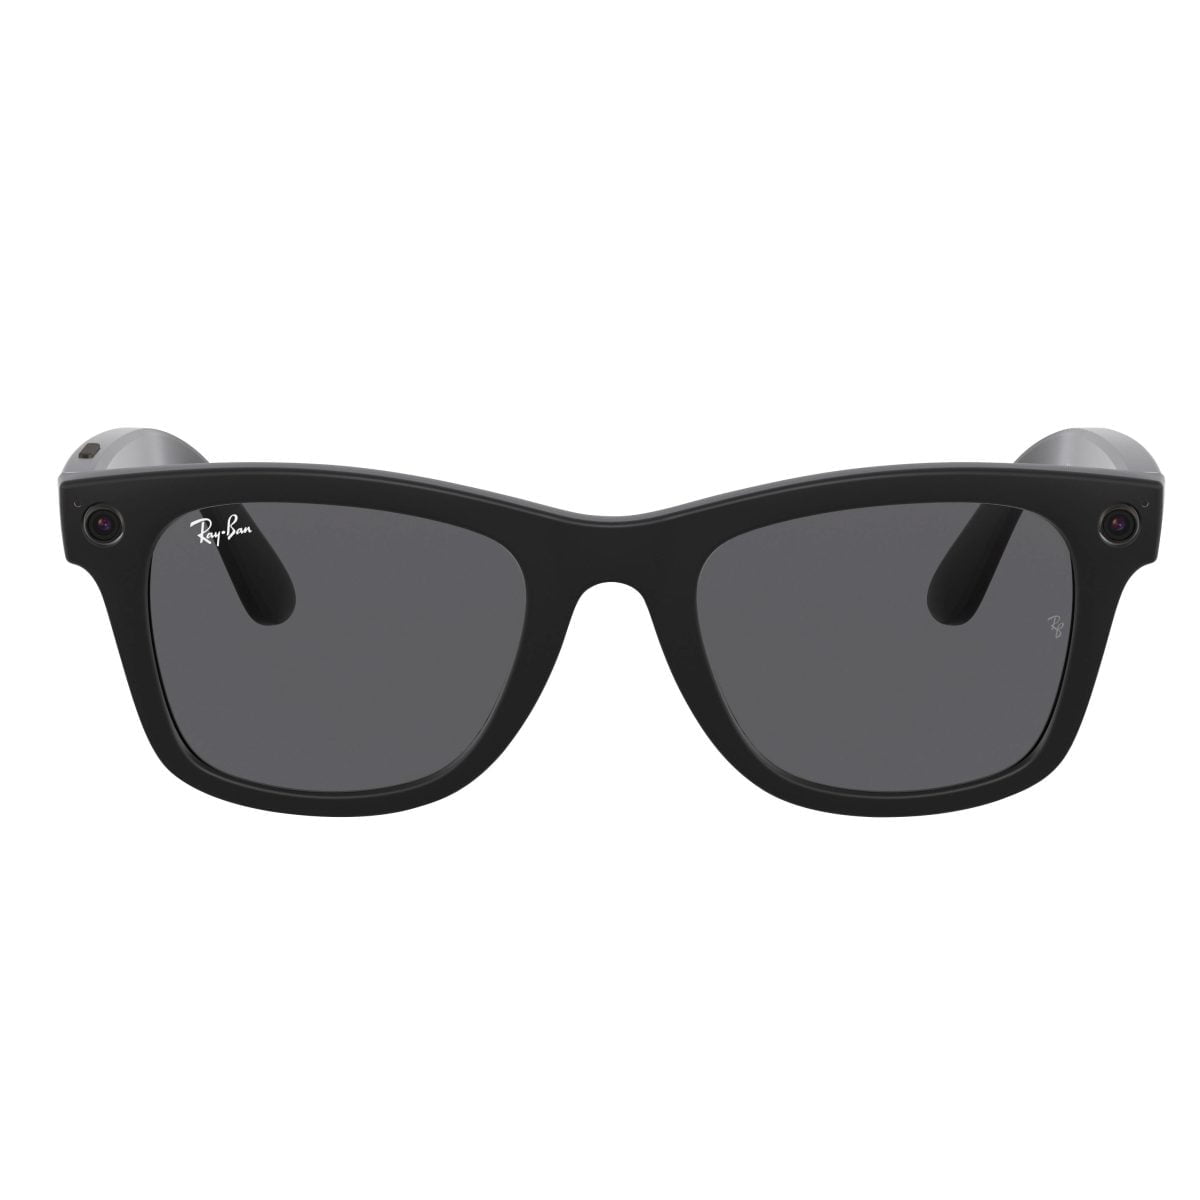 Ray Ban Stories Wayfarer Smart Glasses 53Mm Matte Black / Dark Gray